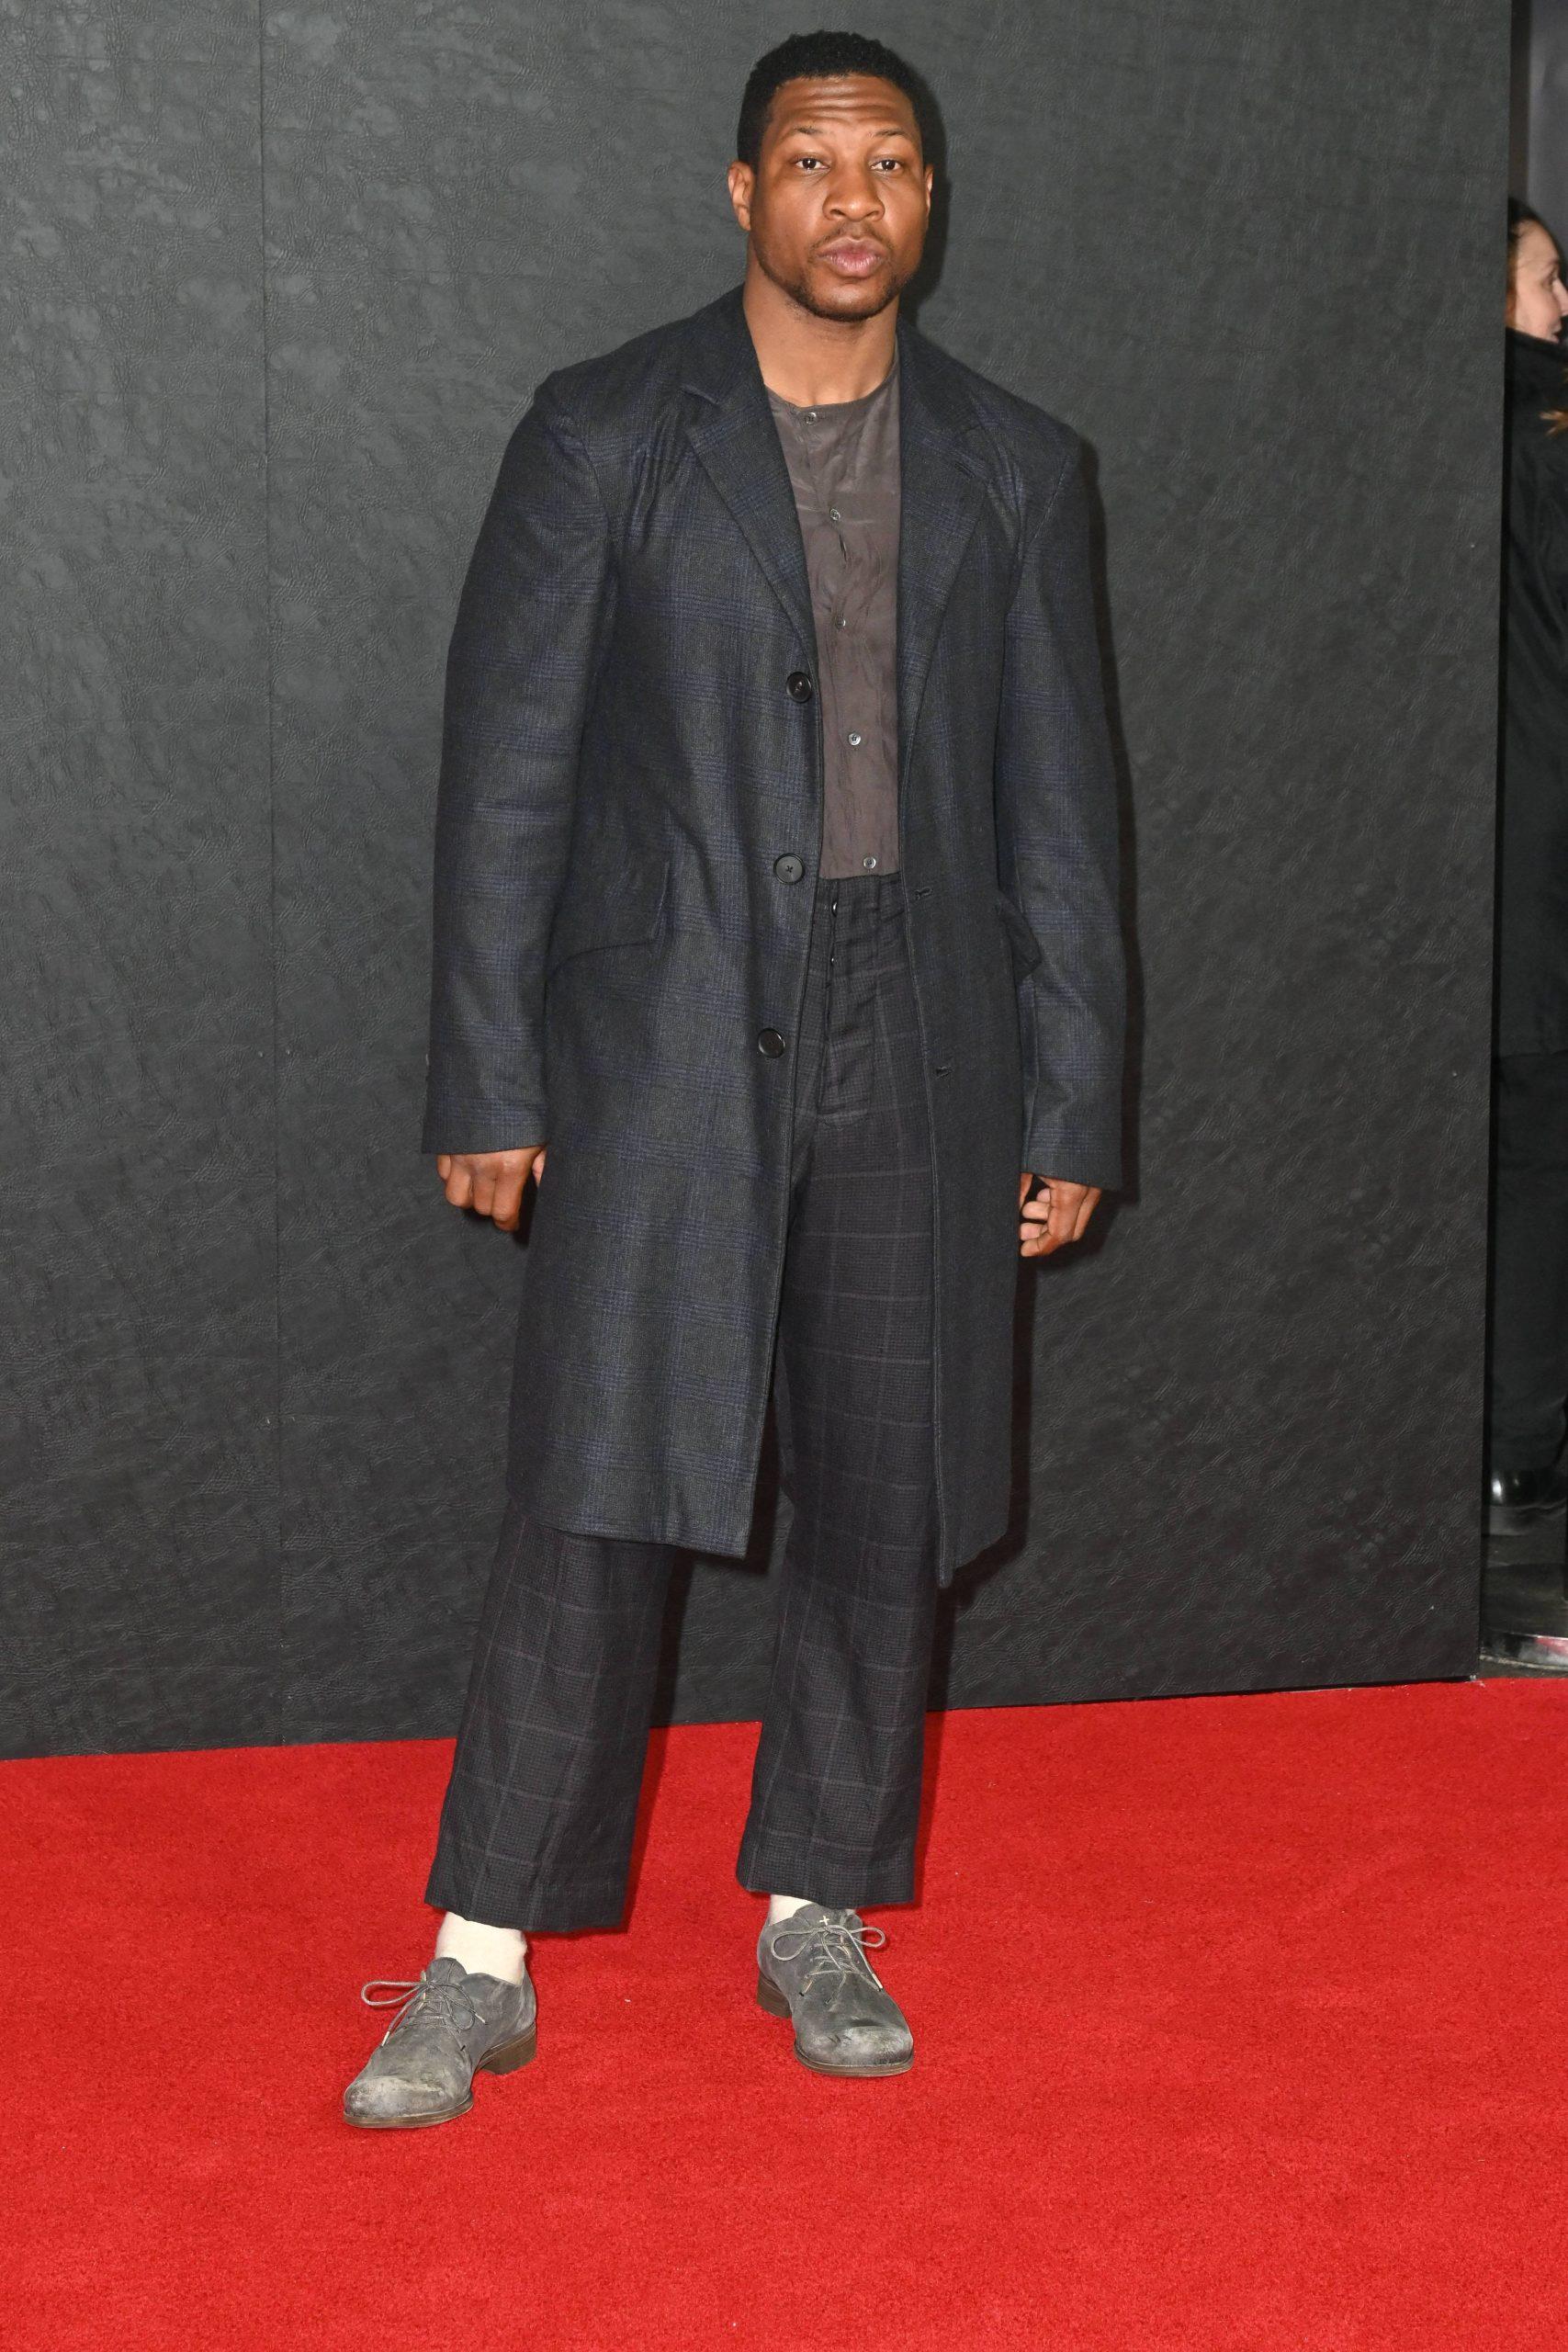 Jonathan Majors at the "Creed III" UK film premiere